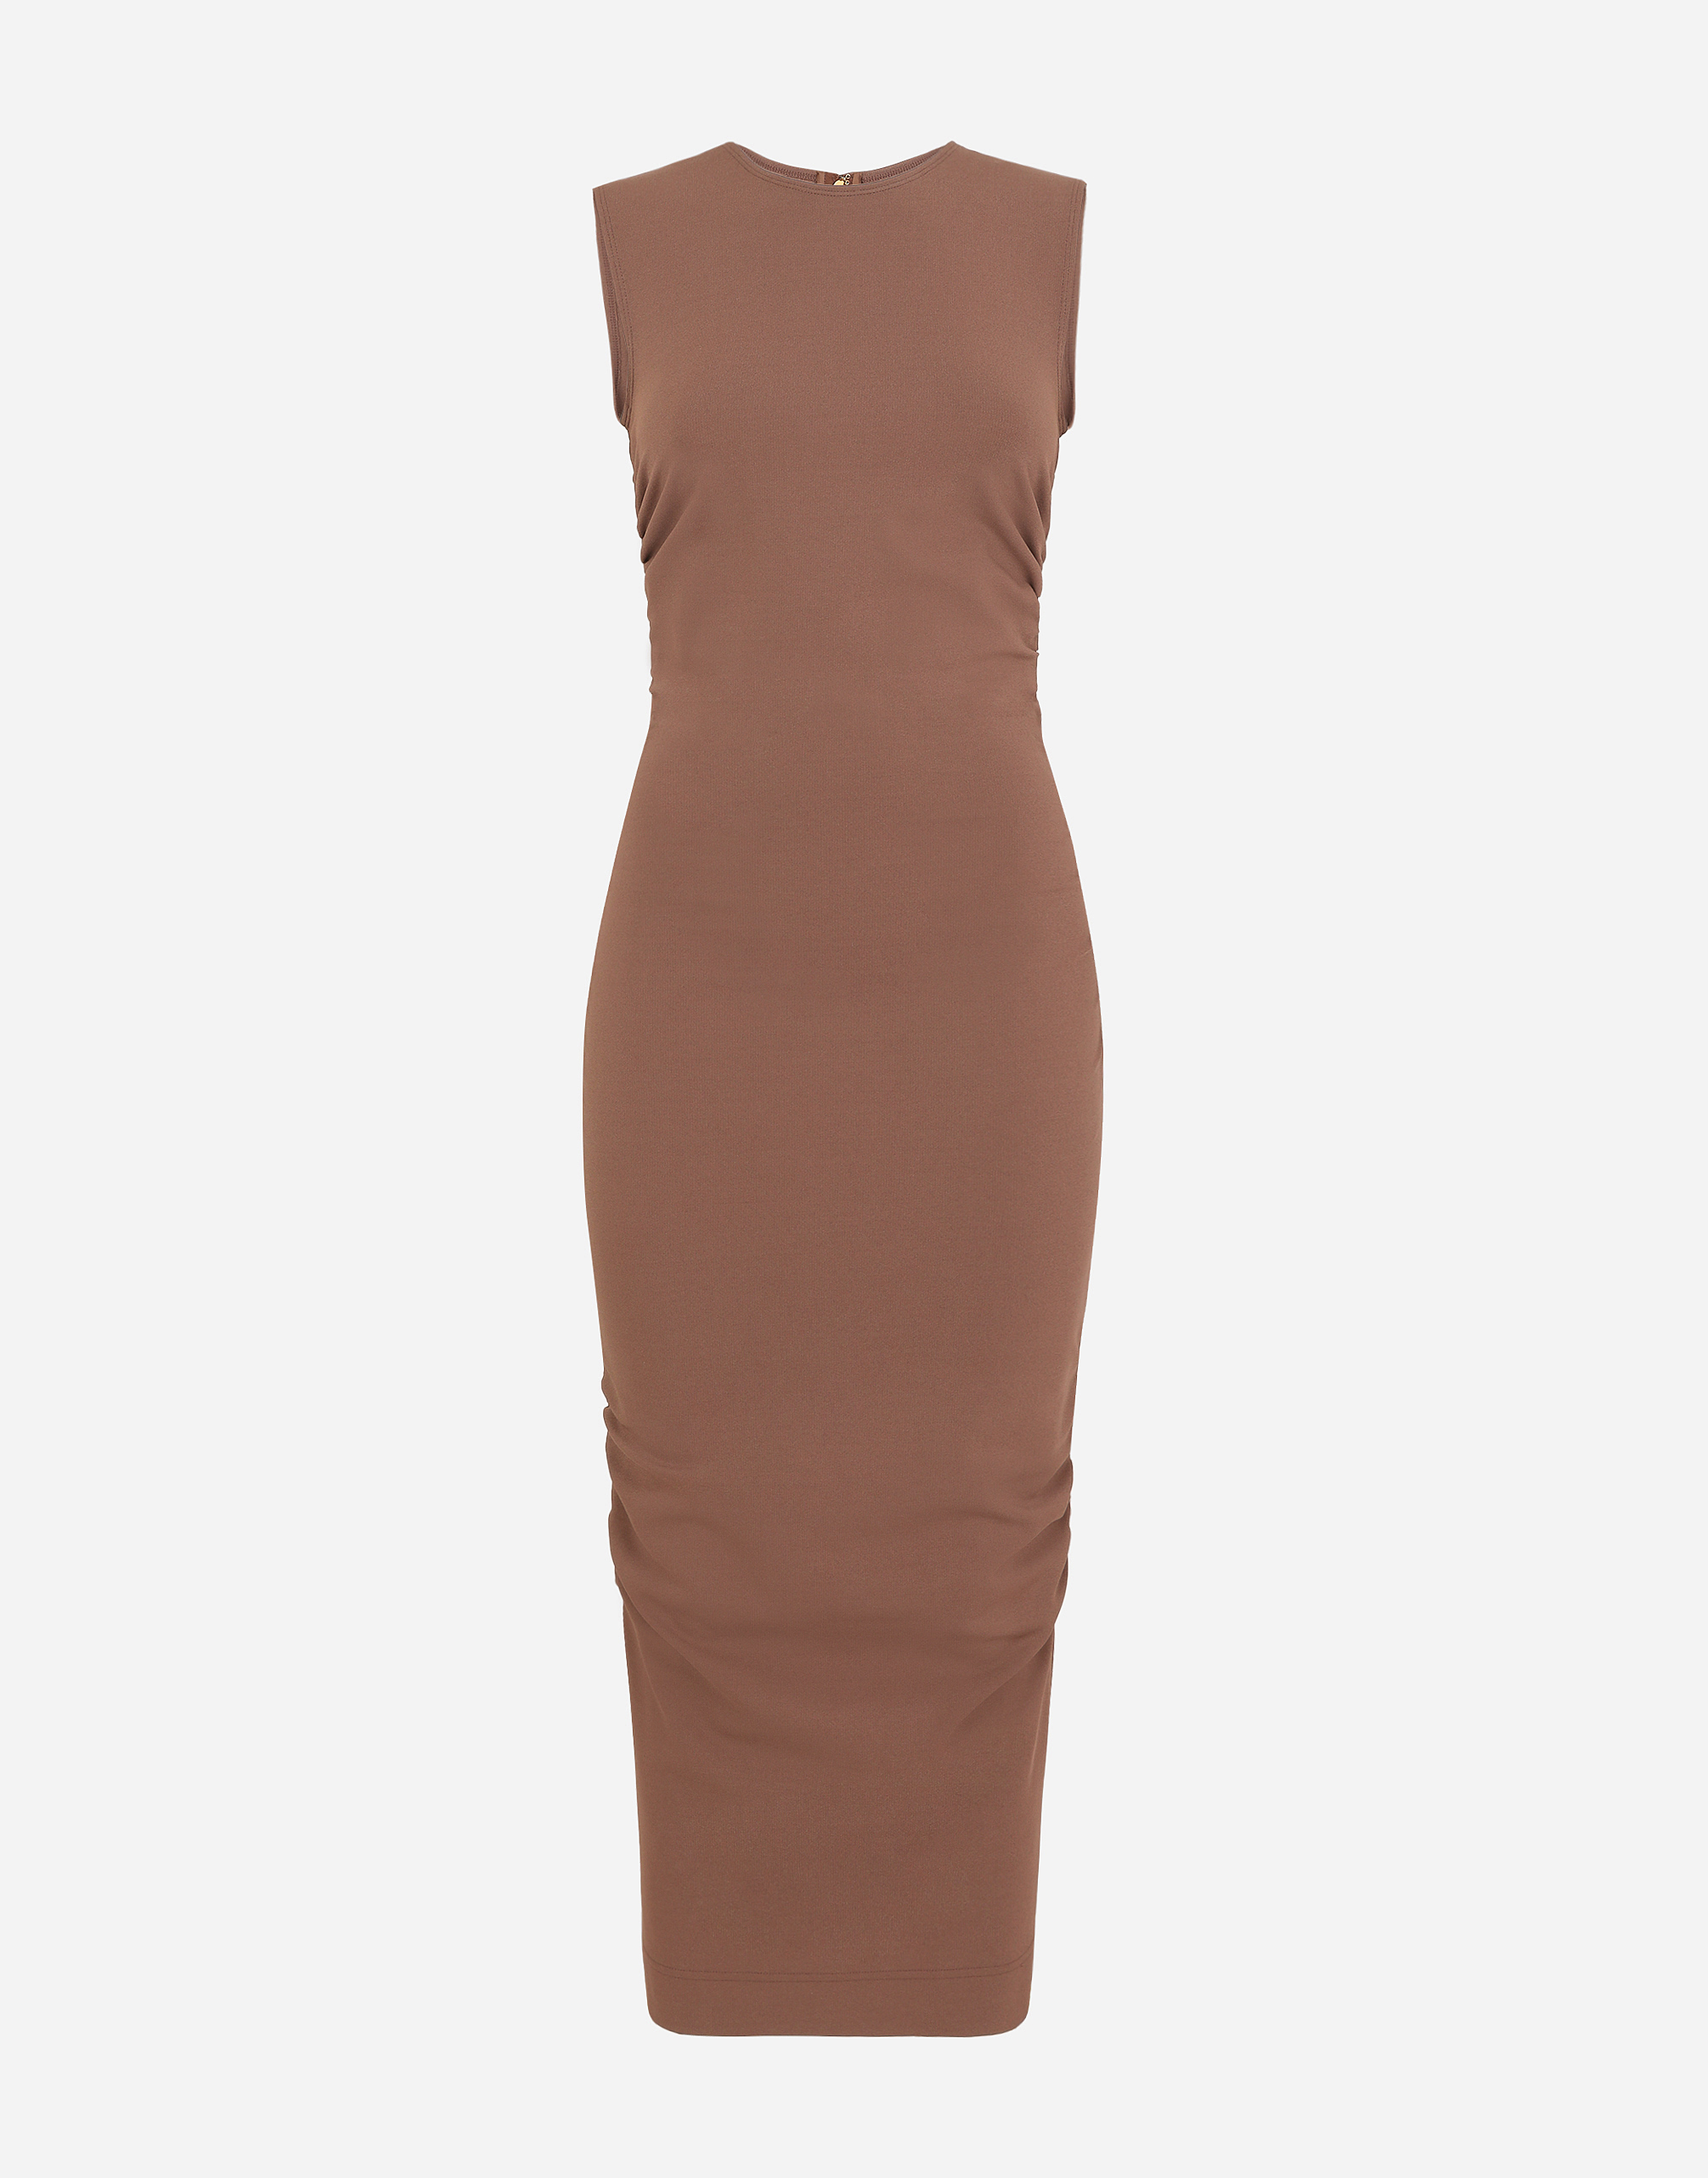 Sleeveless calf-length jersey dress in Brown